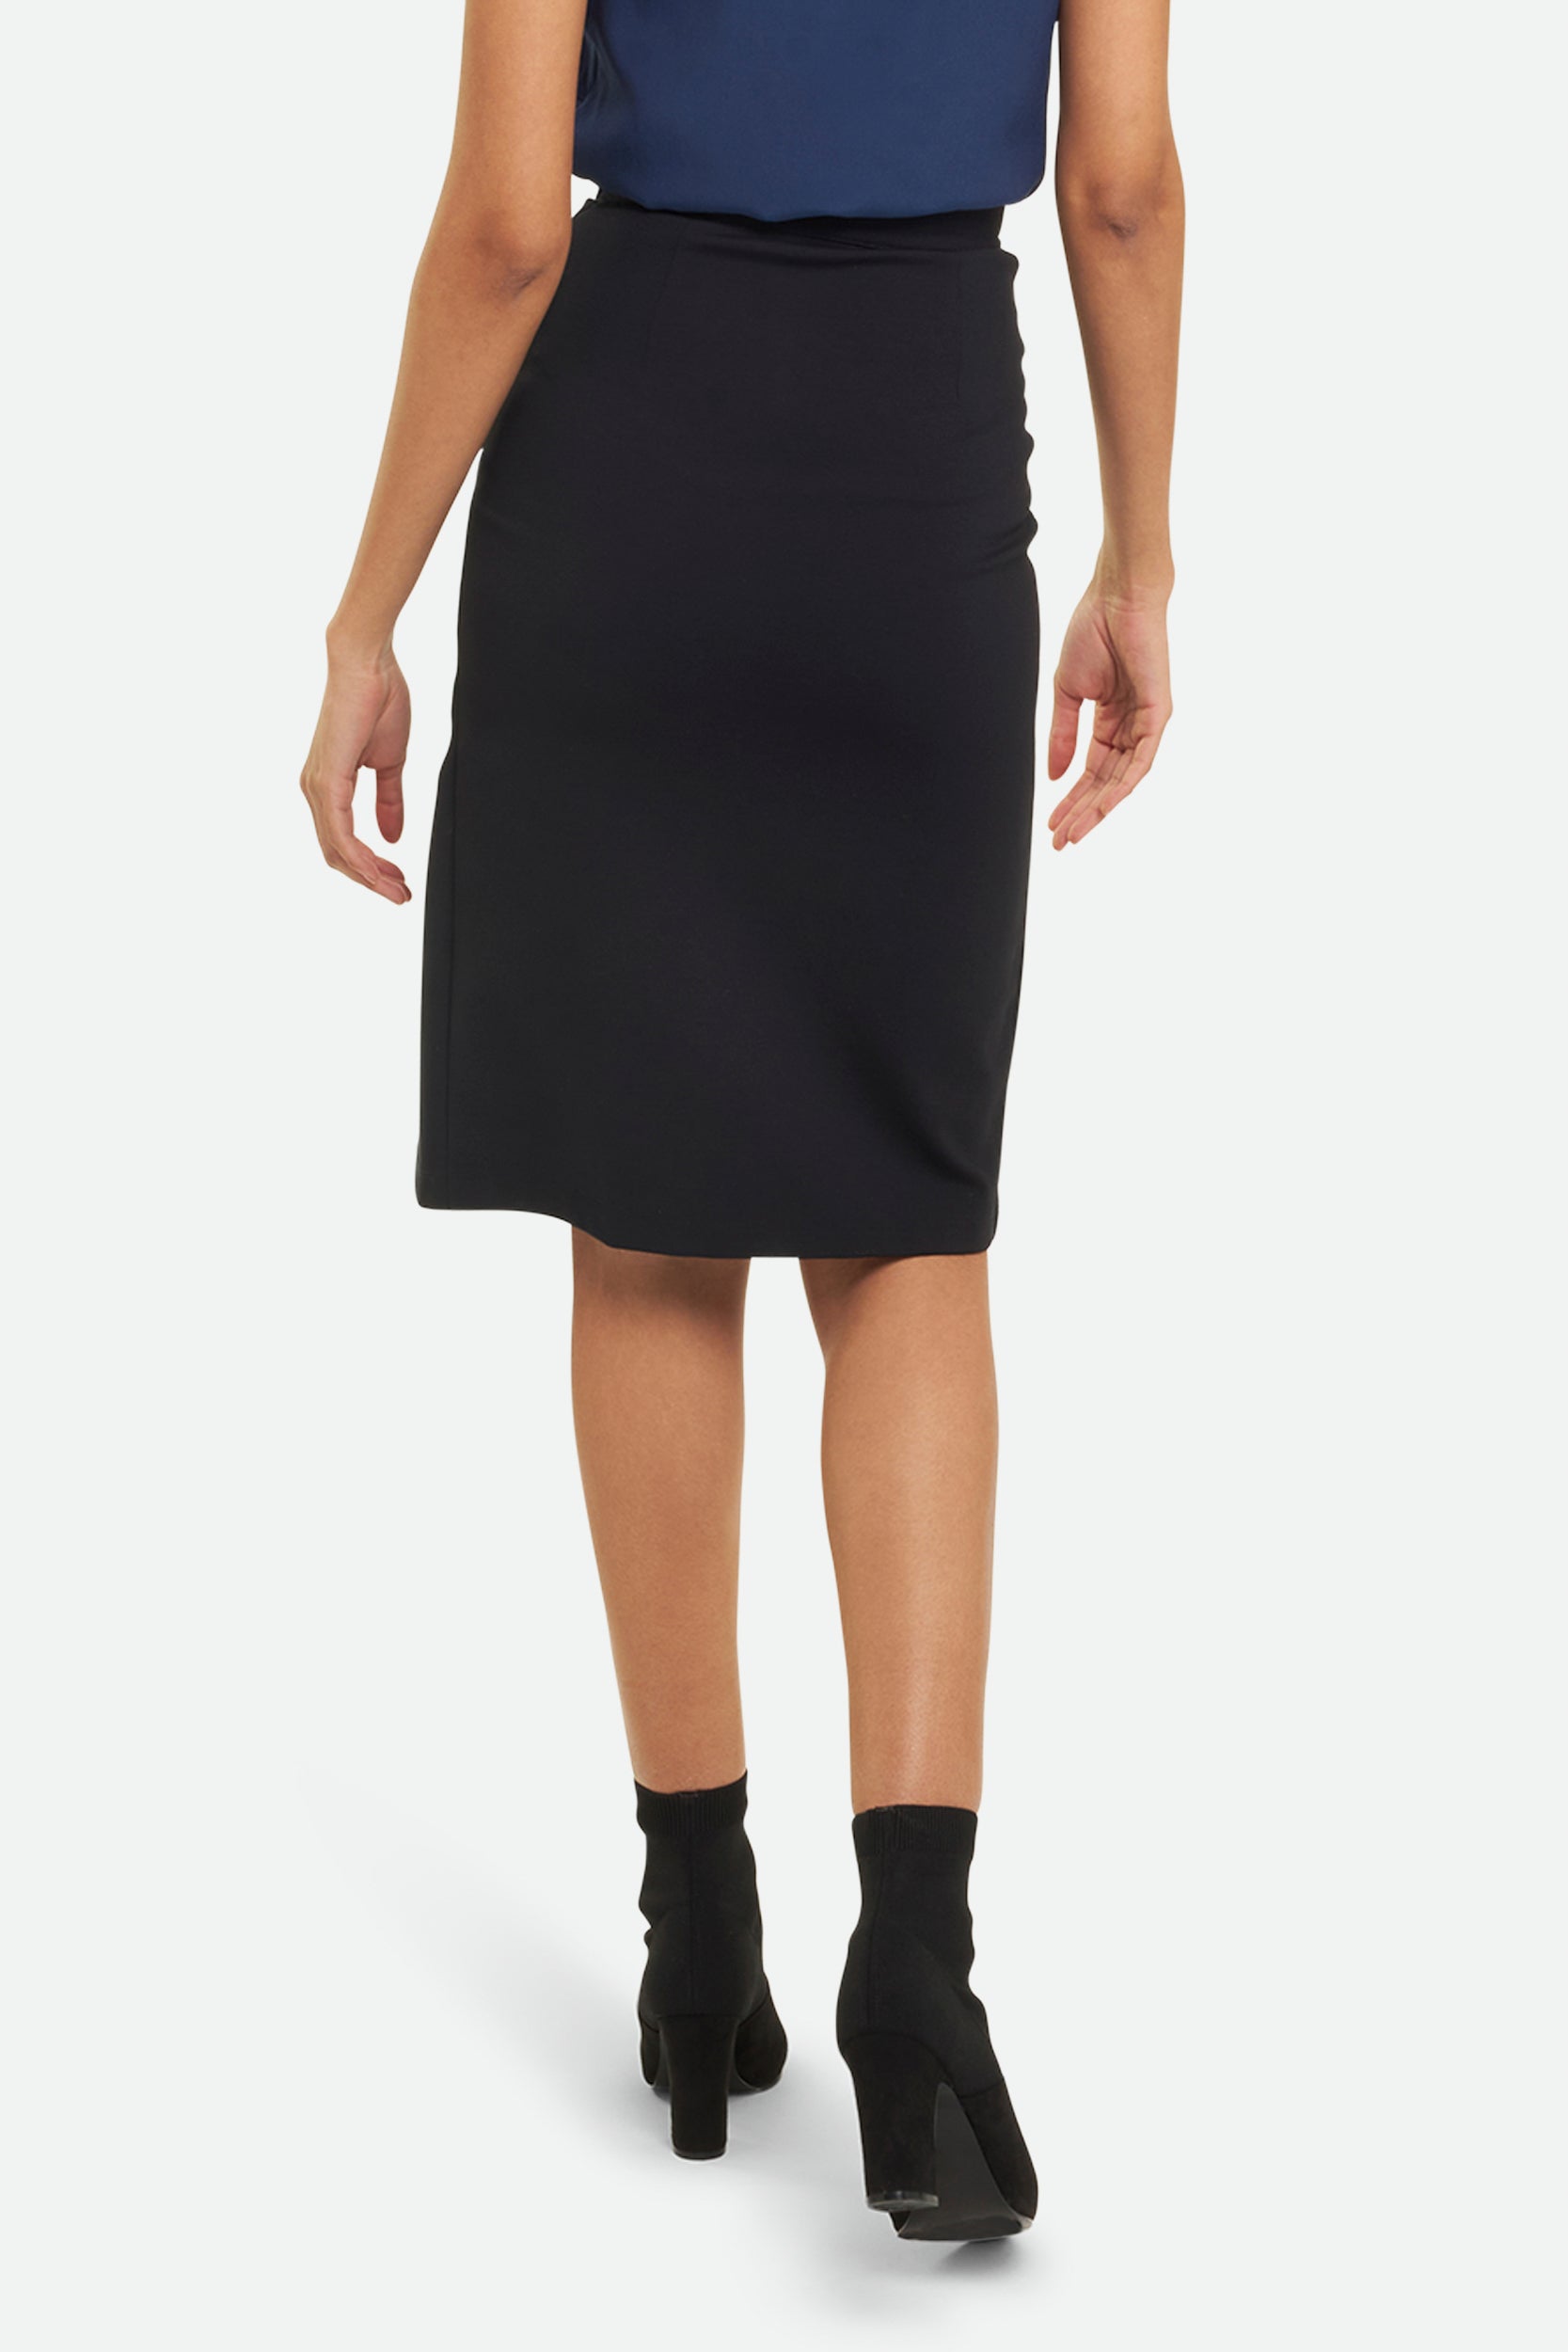 Twinset Black Skirt